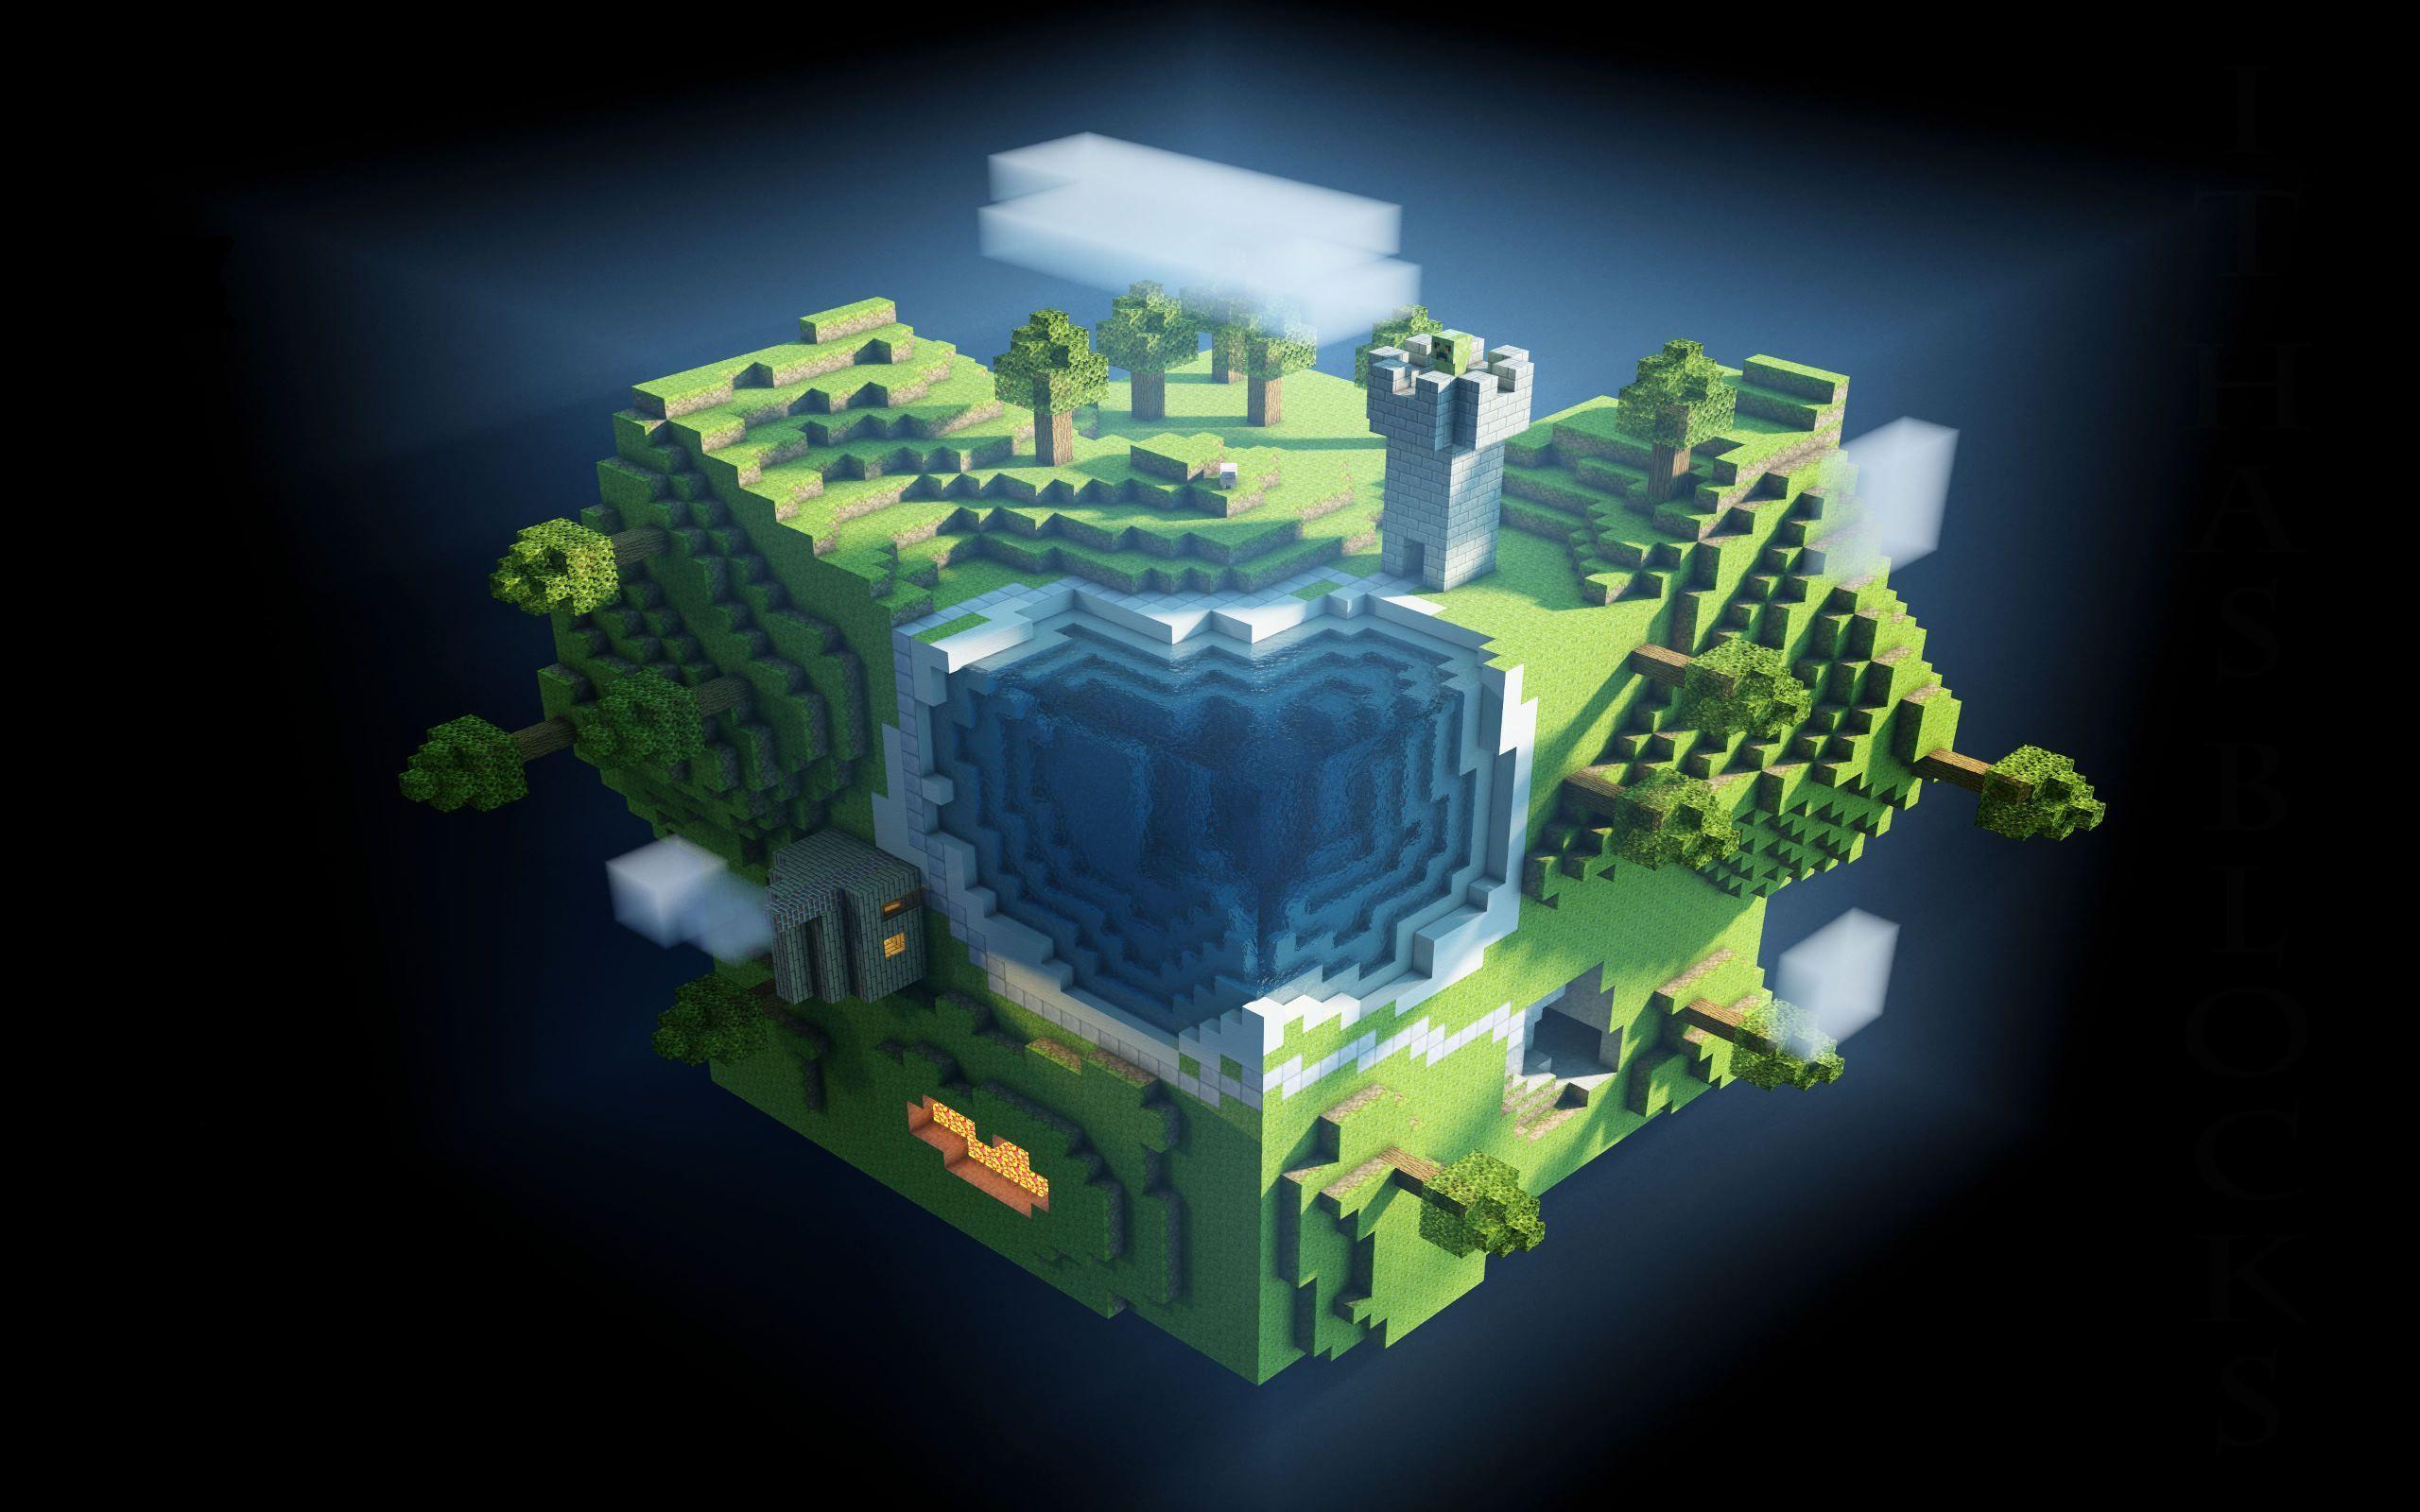 Best Minecraft Backgrounds Wallpaper Cave